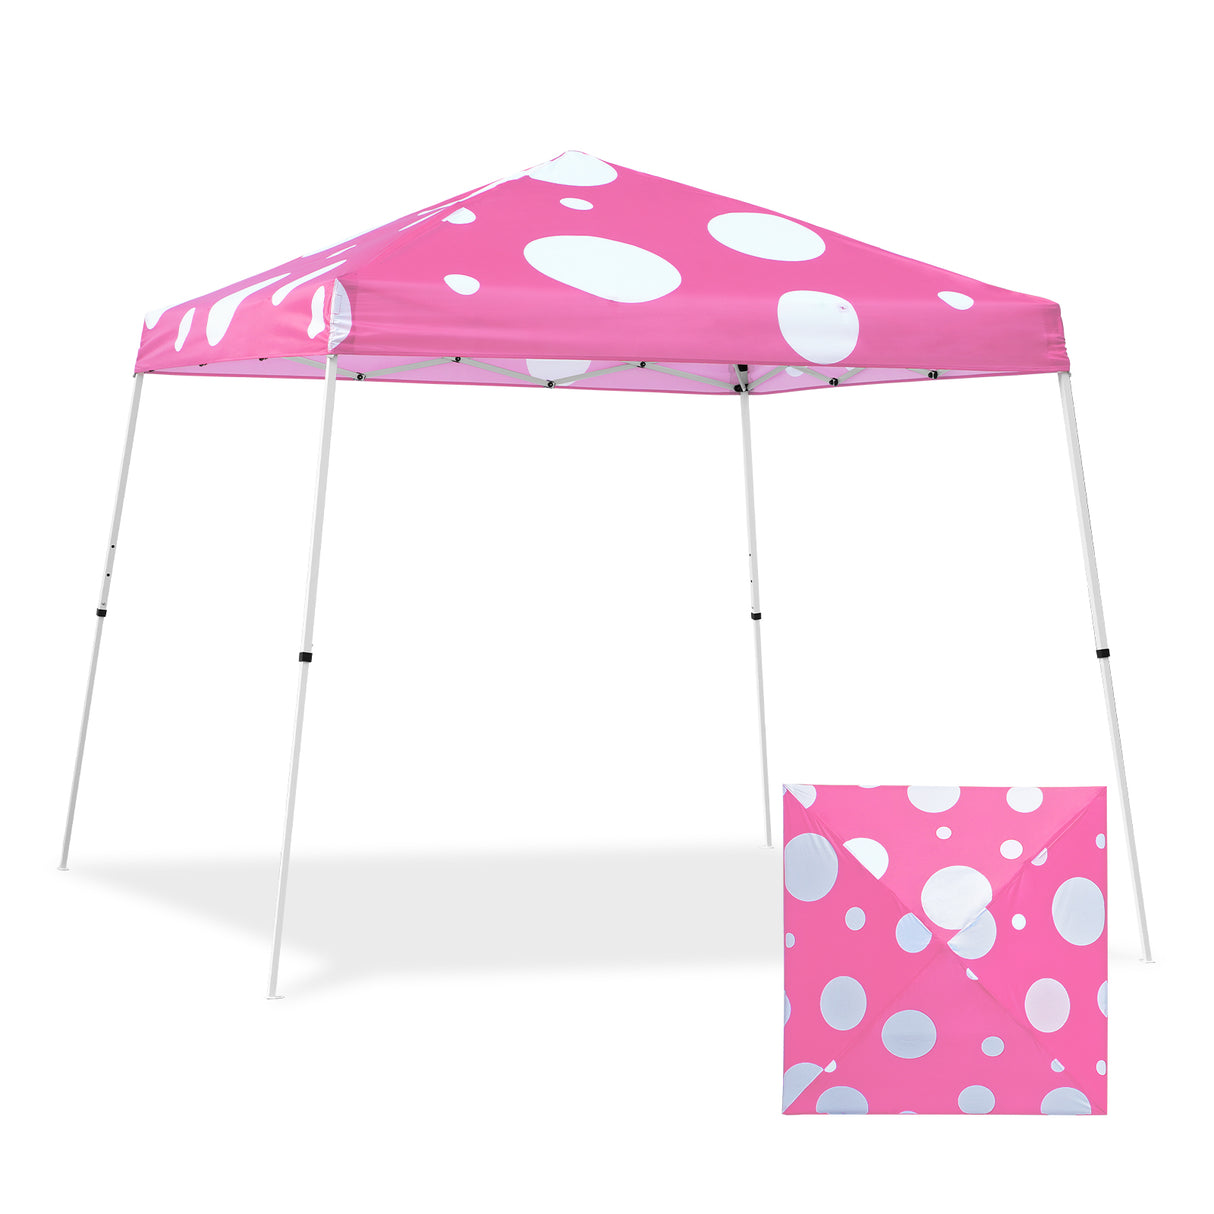 Eagle Peak SHADE GRAPHiX Slant Leg 10x10 Easy Setup Pop Up Canopy Tent (Pink Mushroom Top)